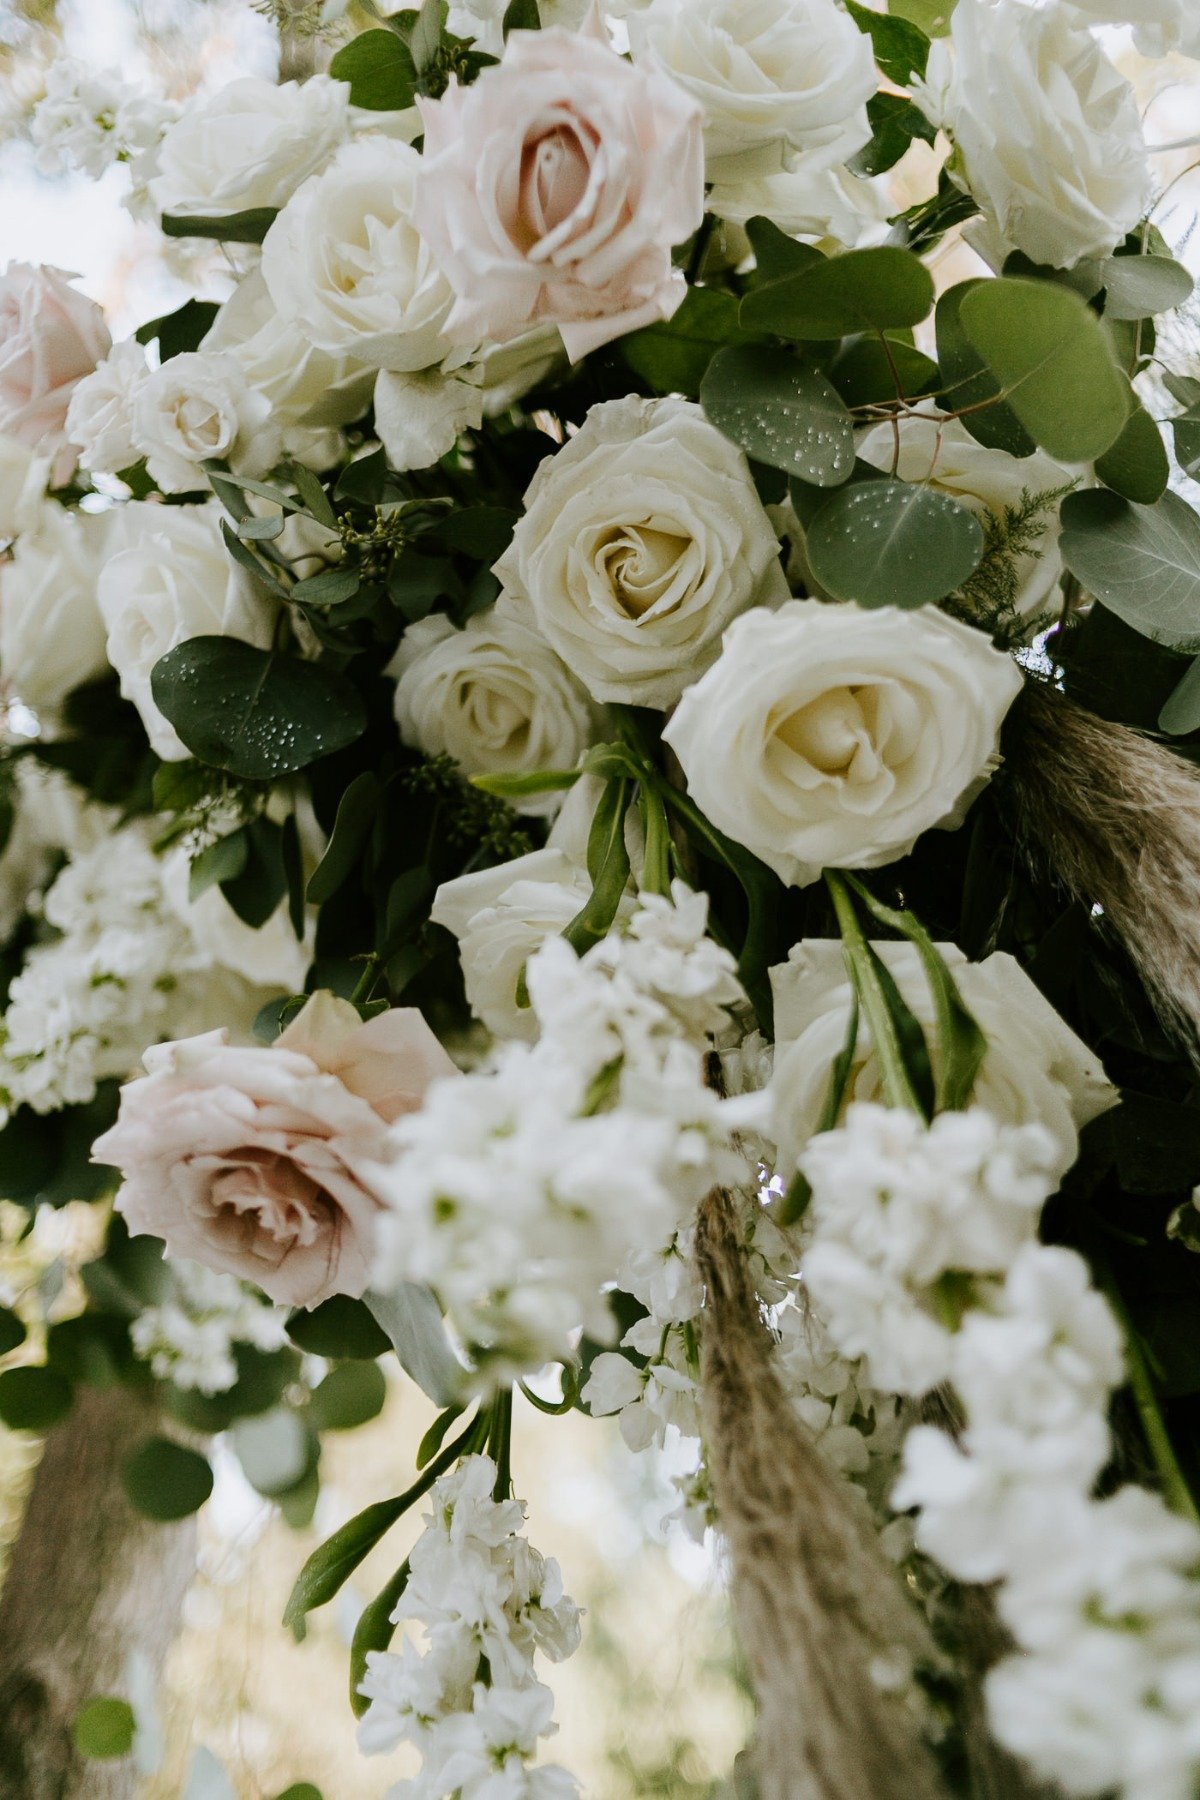 florals for wedding ceremony backdrop